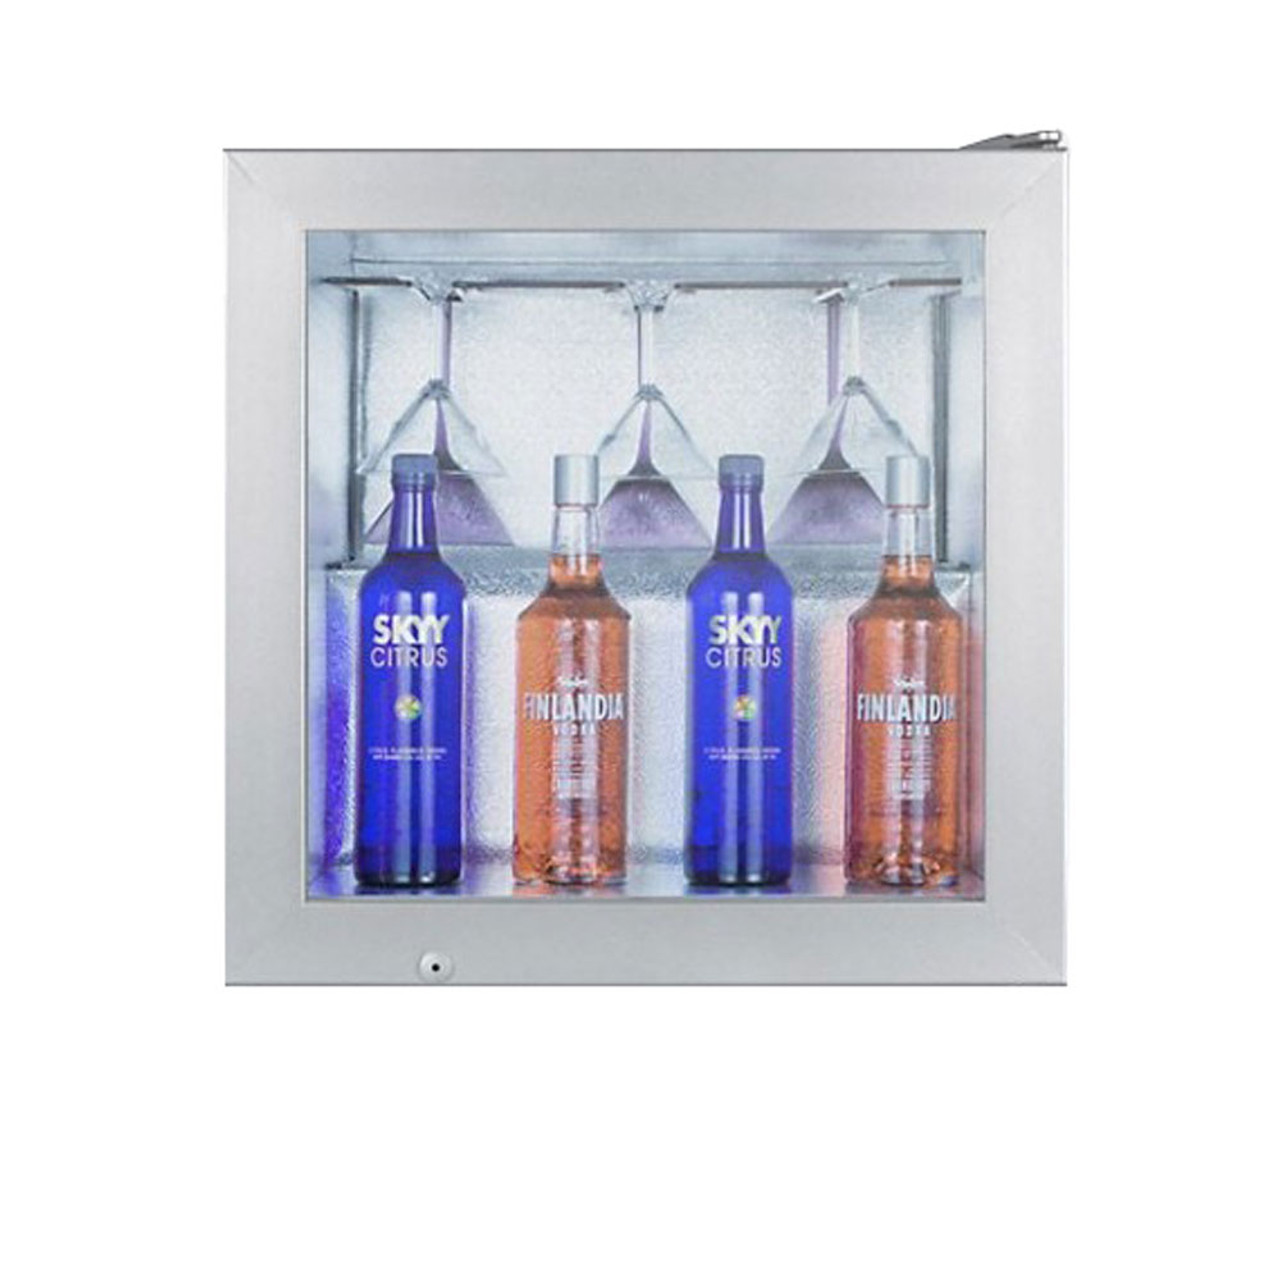 FINLANDIA VODKA 15” Tall Glass Drink Dispenser Infuser, Tested